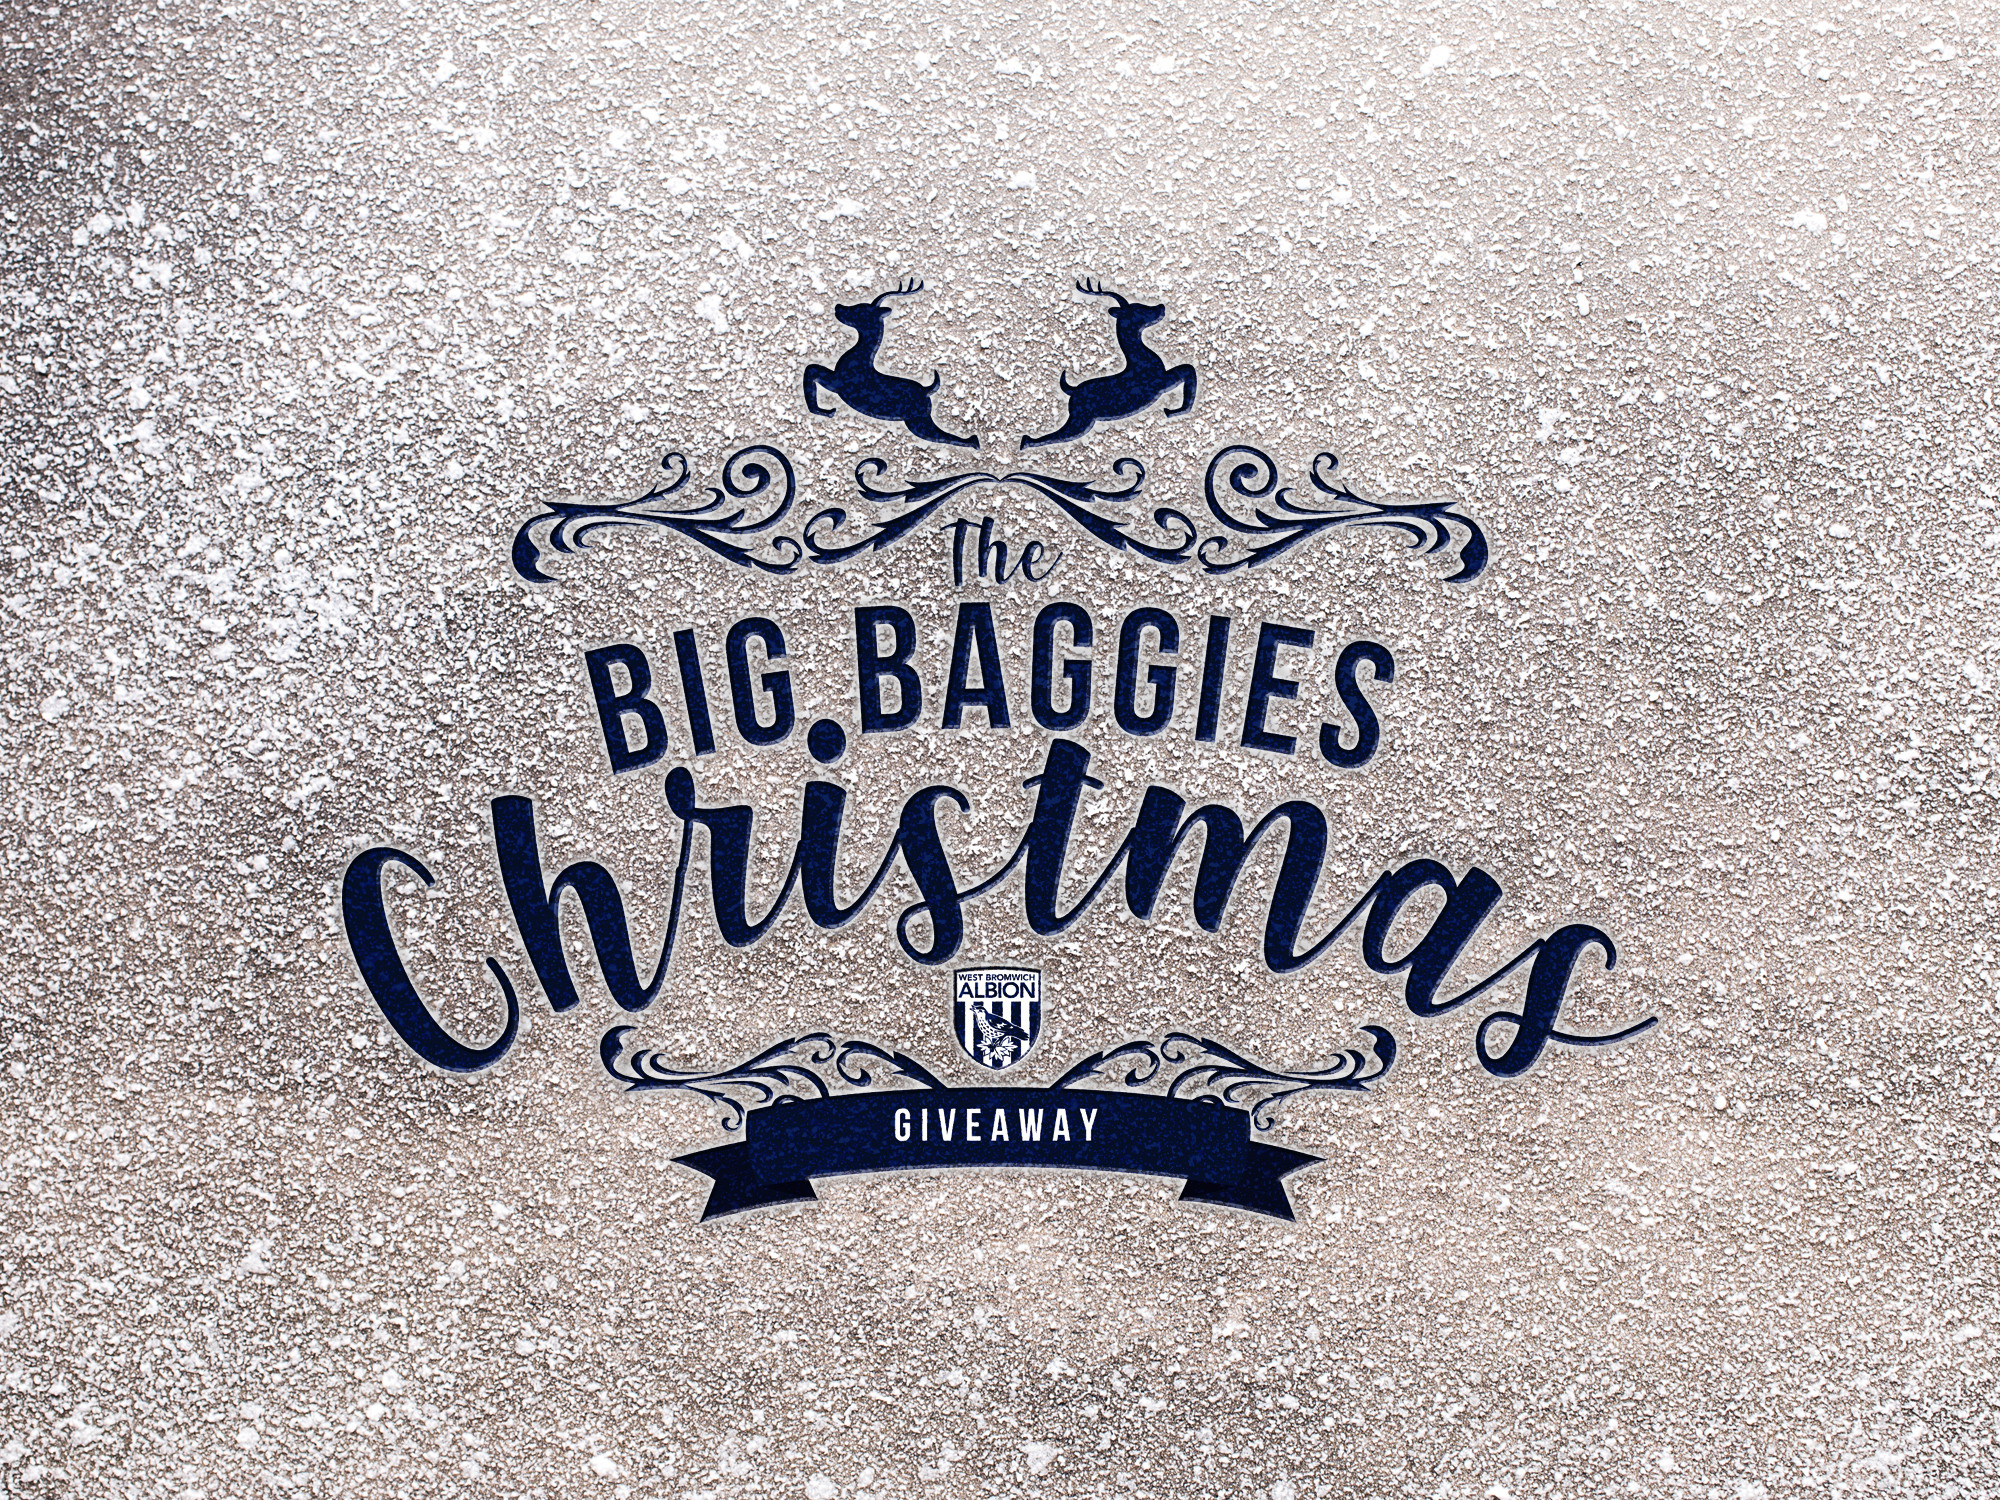 The Big Baggies Christmas Giveaway